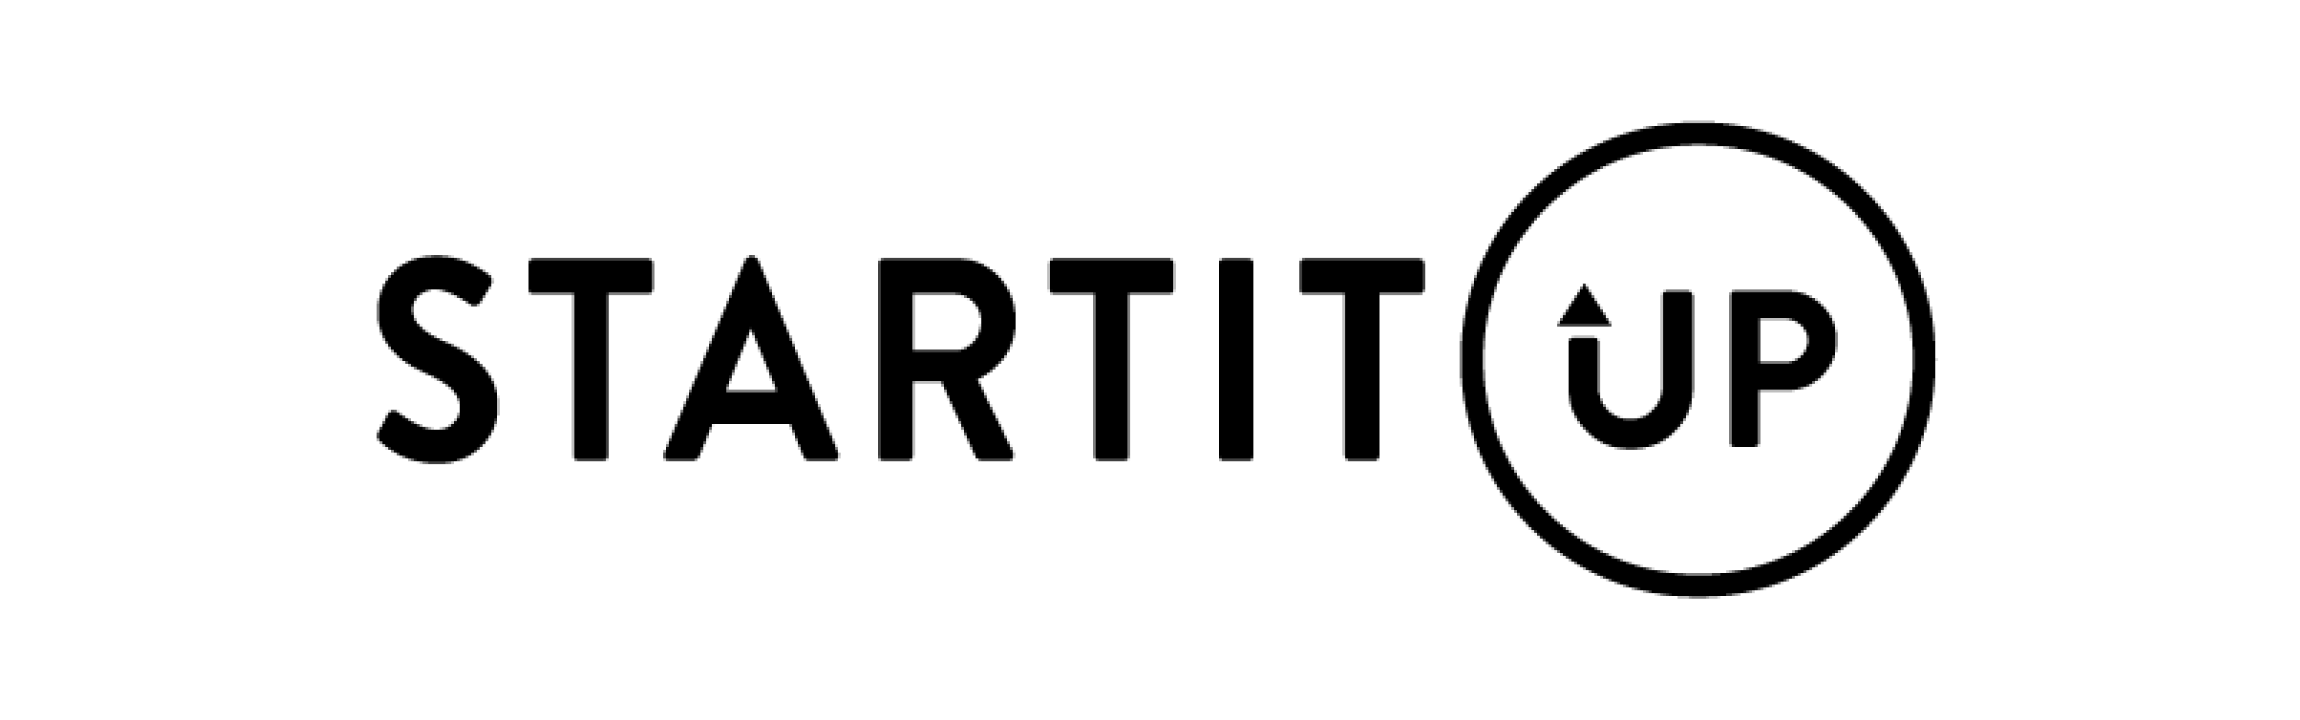 Startitup logo in black color